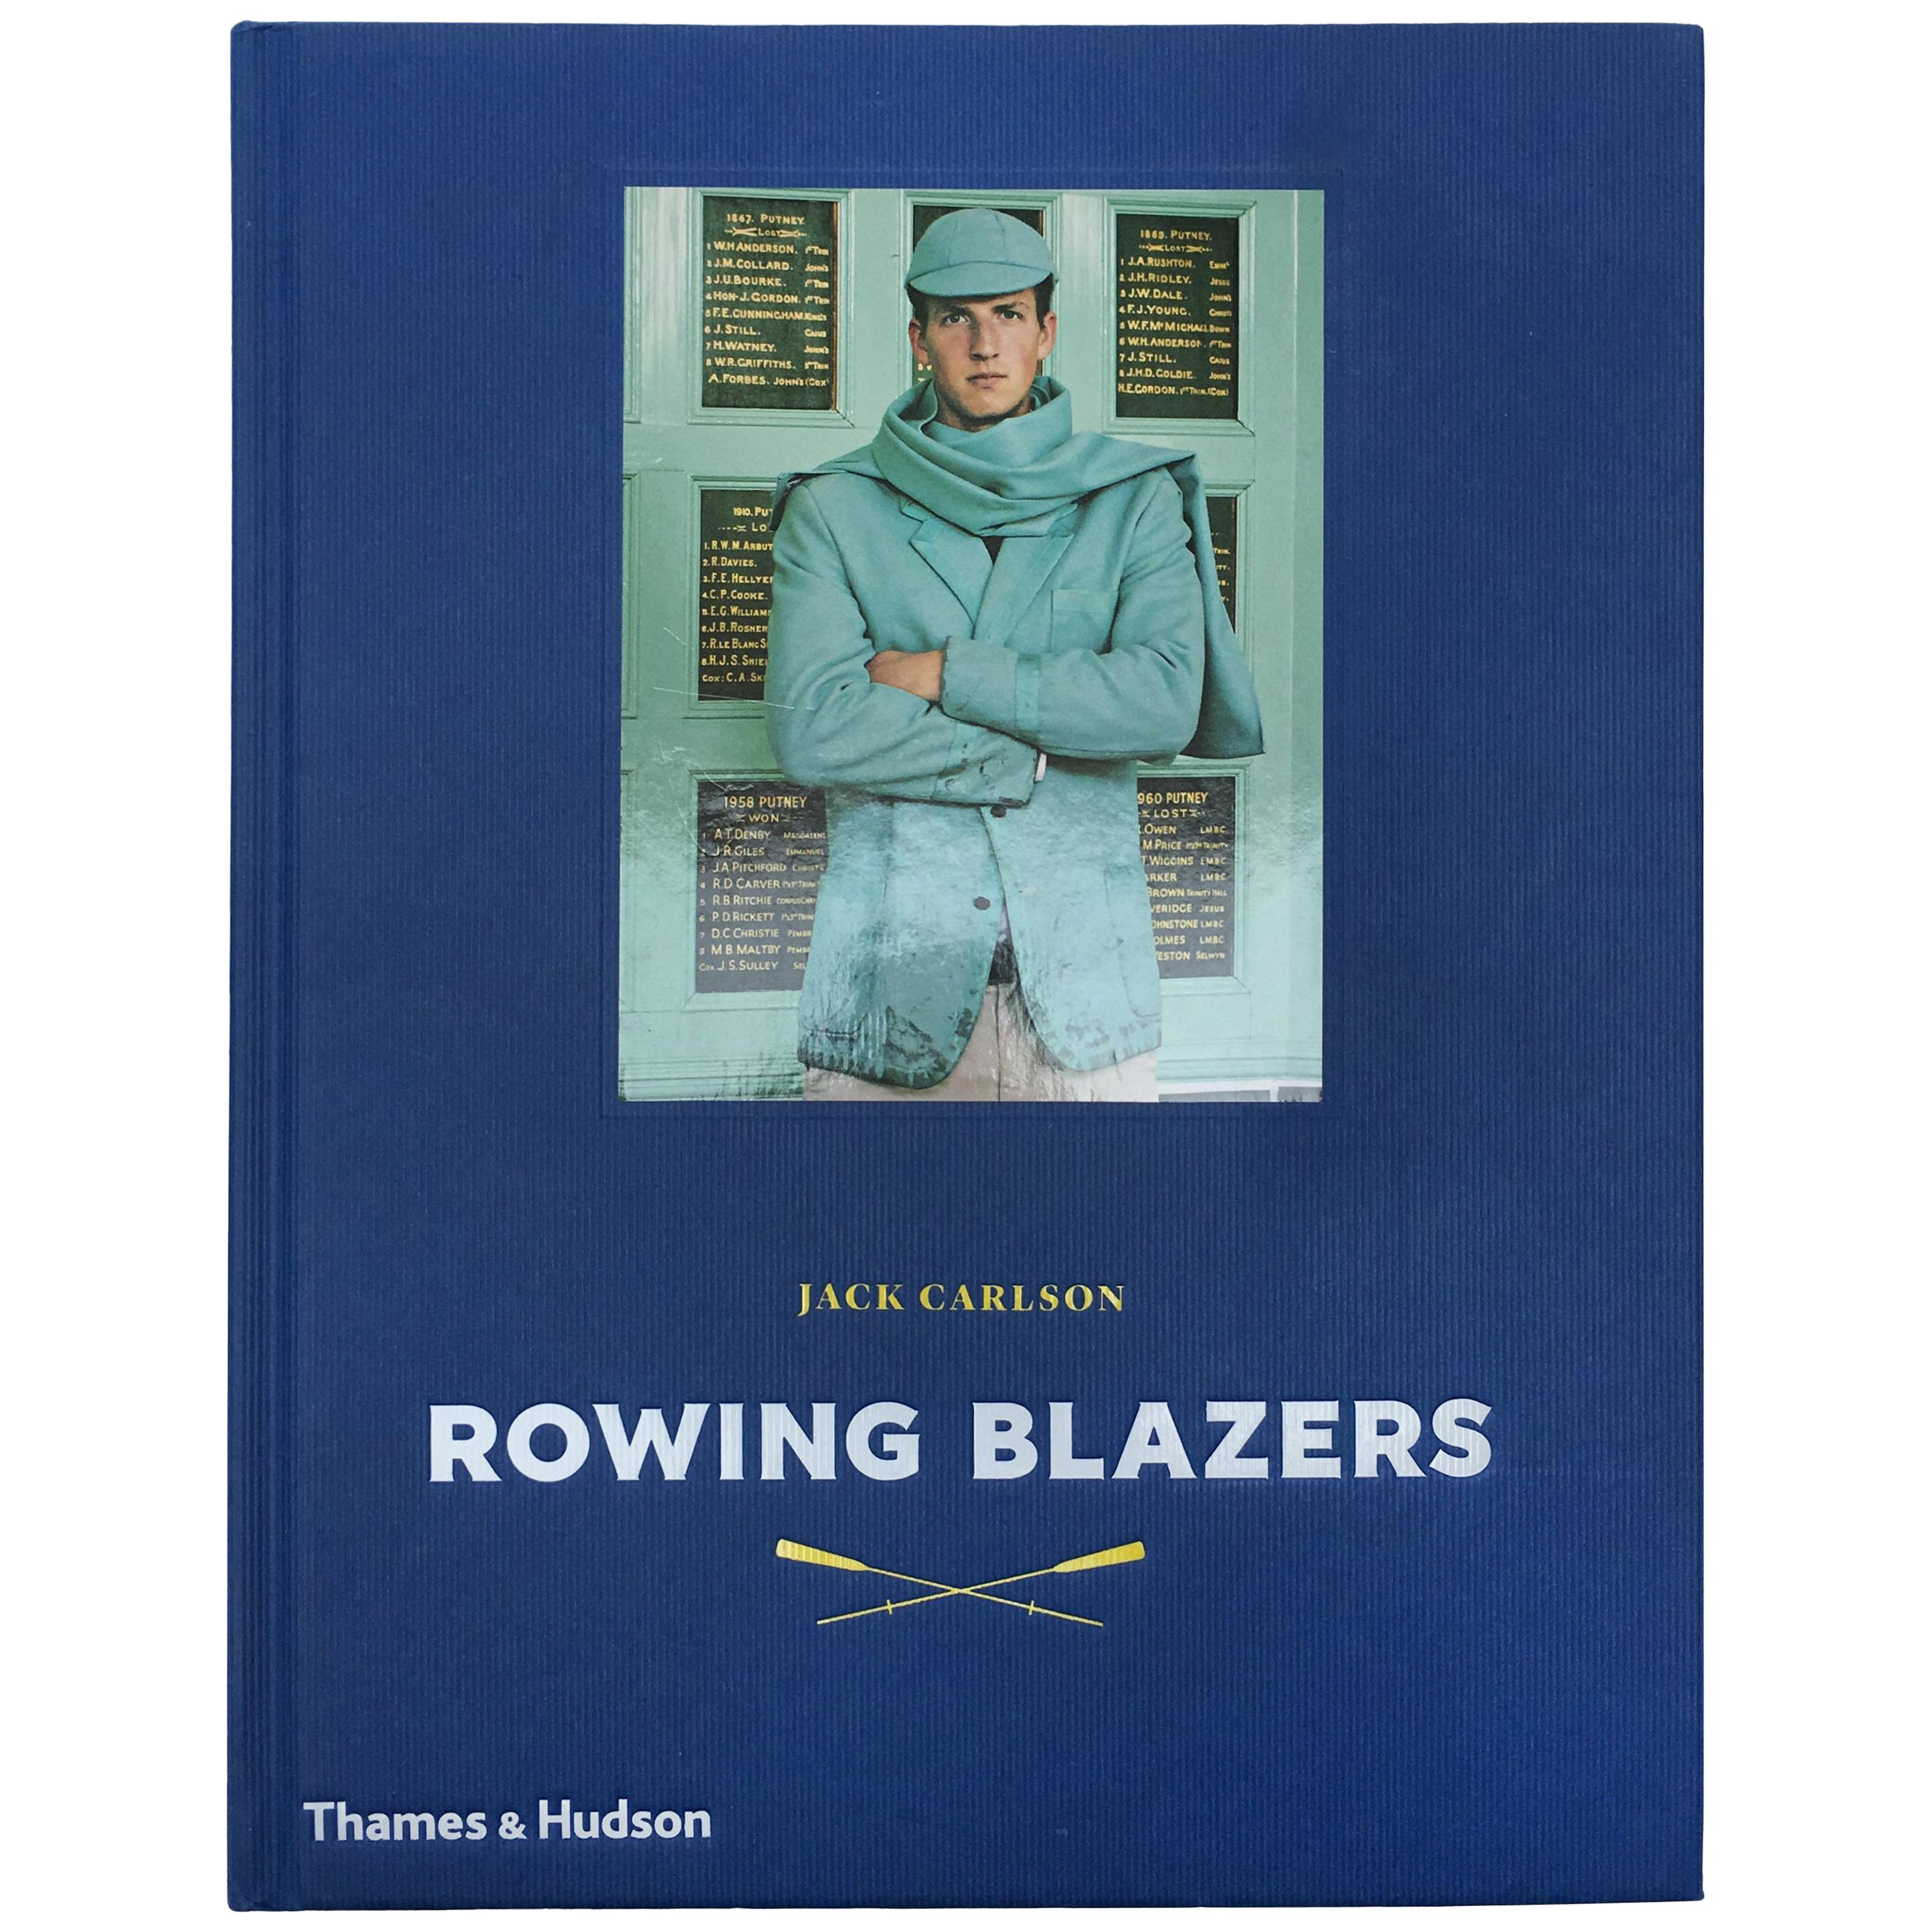 Rowing Blazers by Jack Carlson